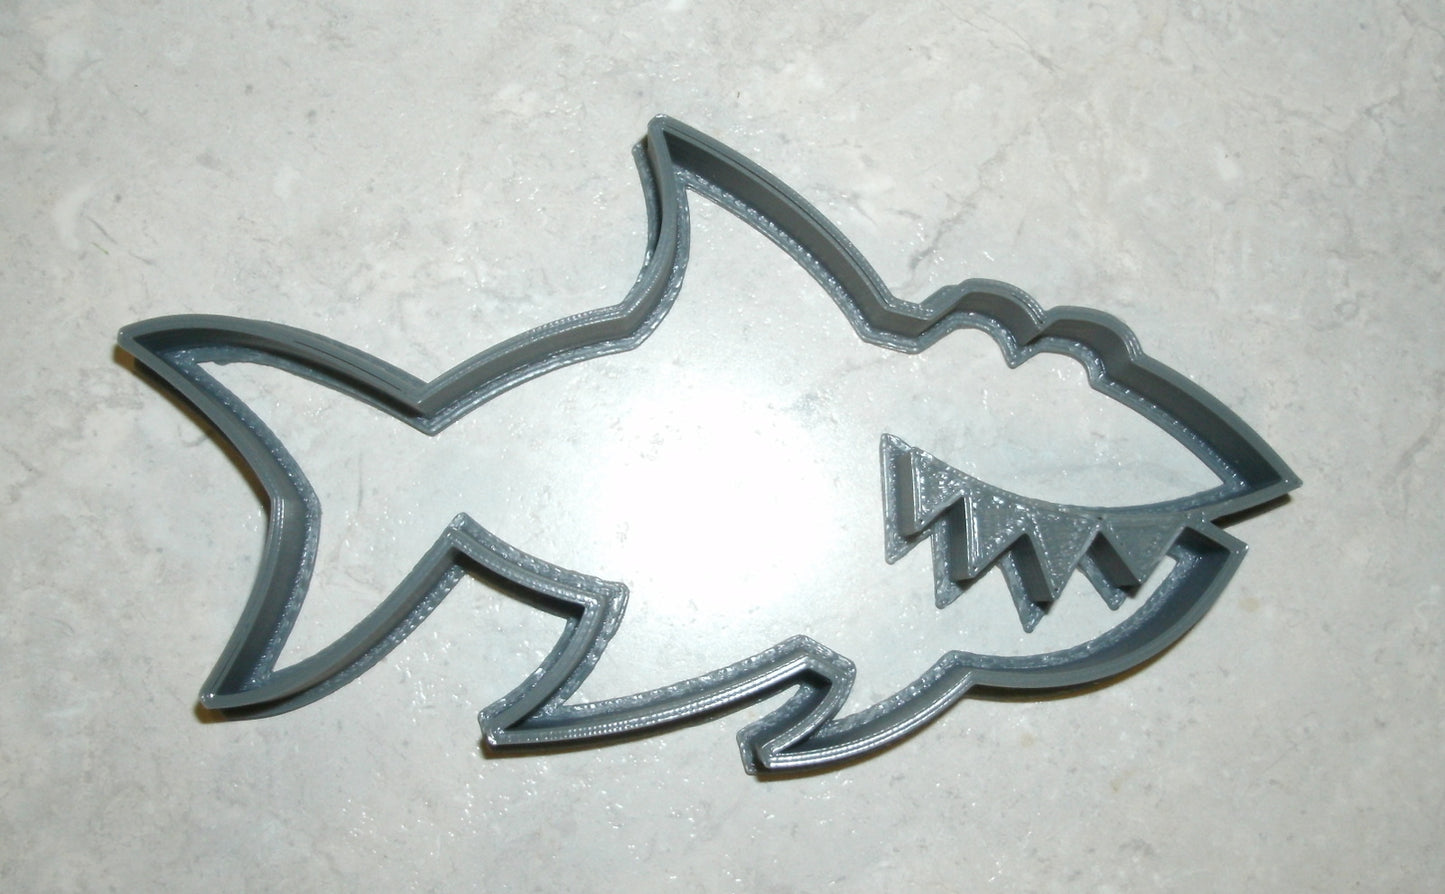 Shark Fish Ocean Sea Predator Cartoon Cookie Cutter Made in USA PR595